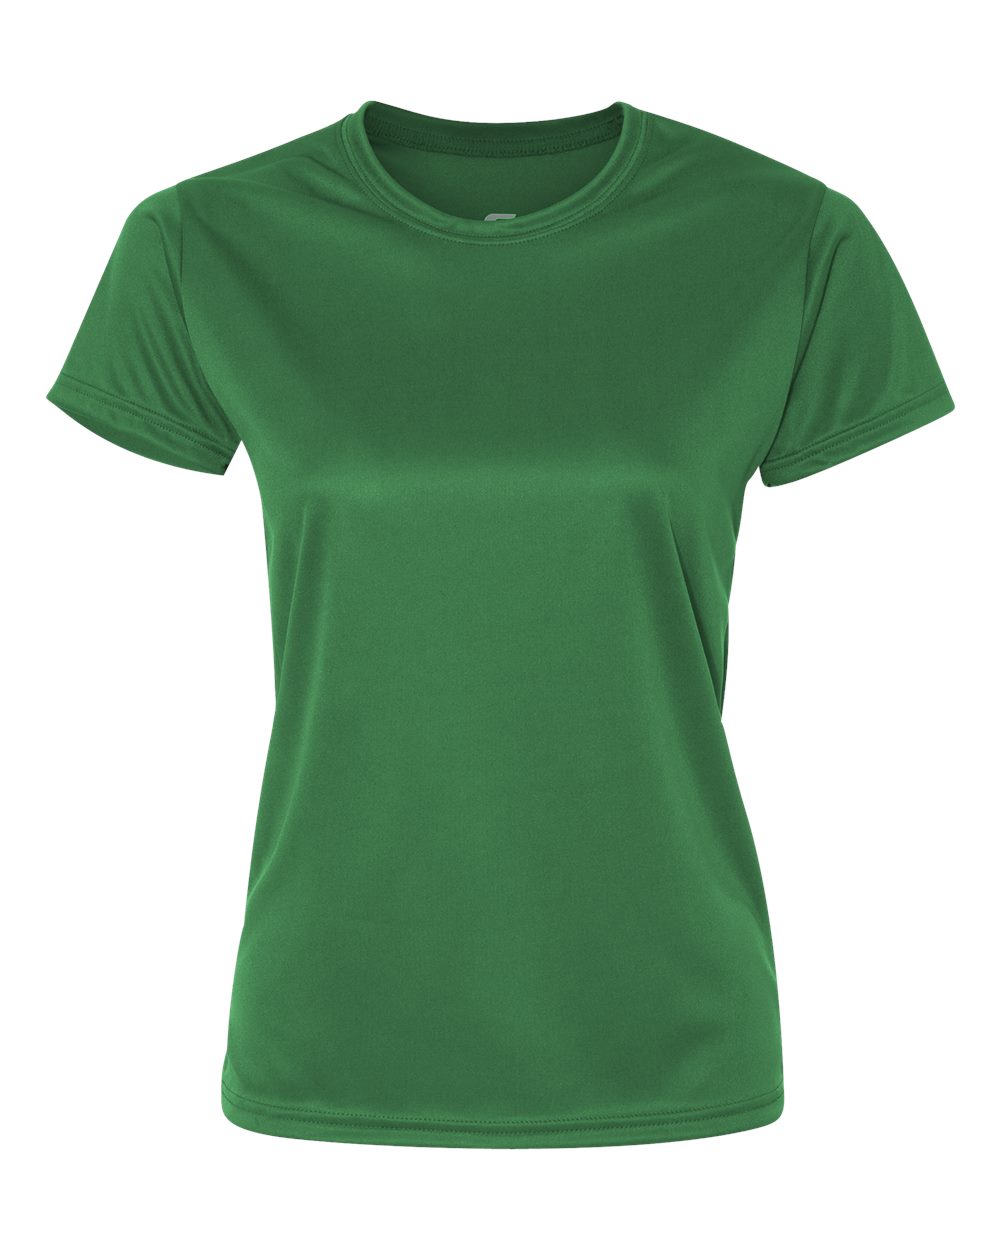 C2 Sport - Women’s Performance Short Sleeve T-Shirt - 5600 - Century ...